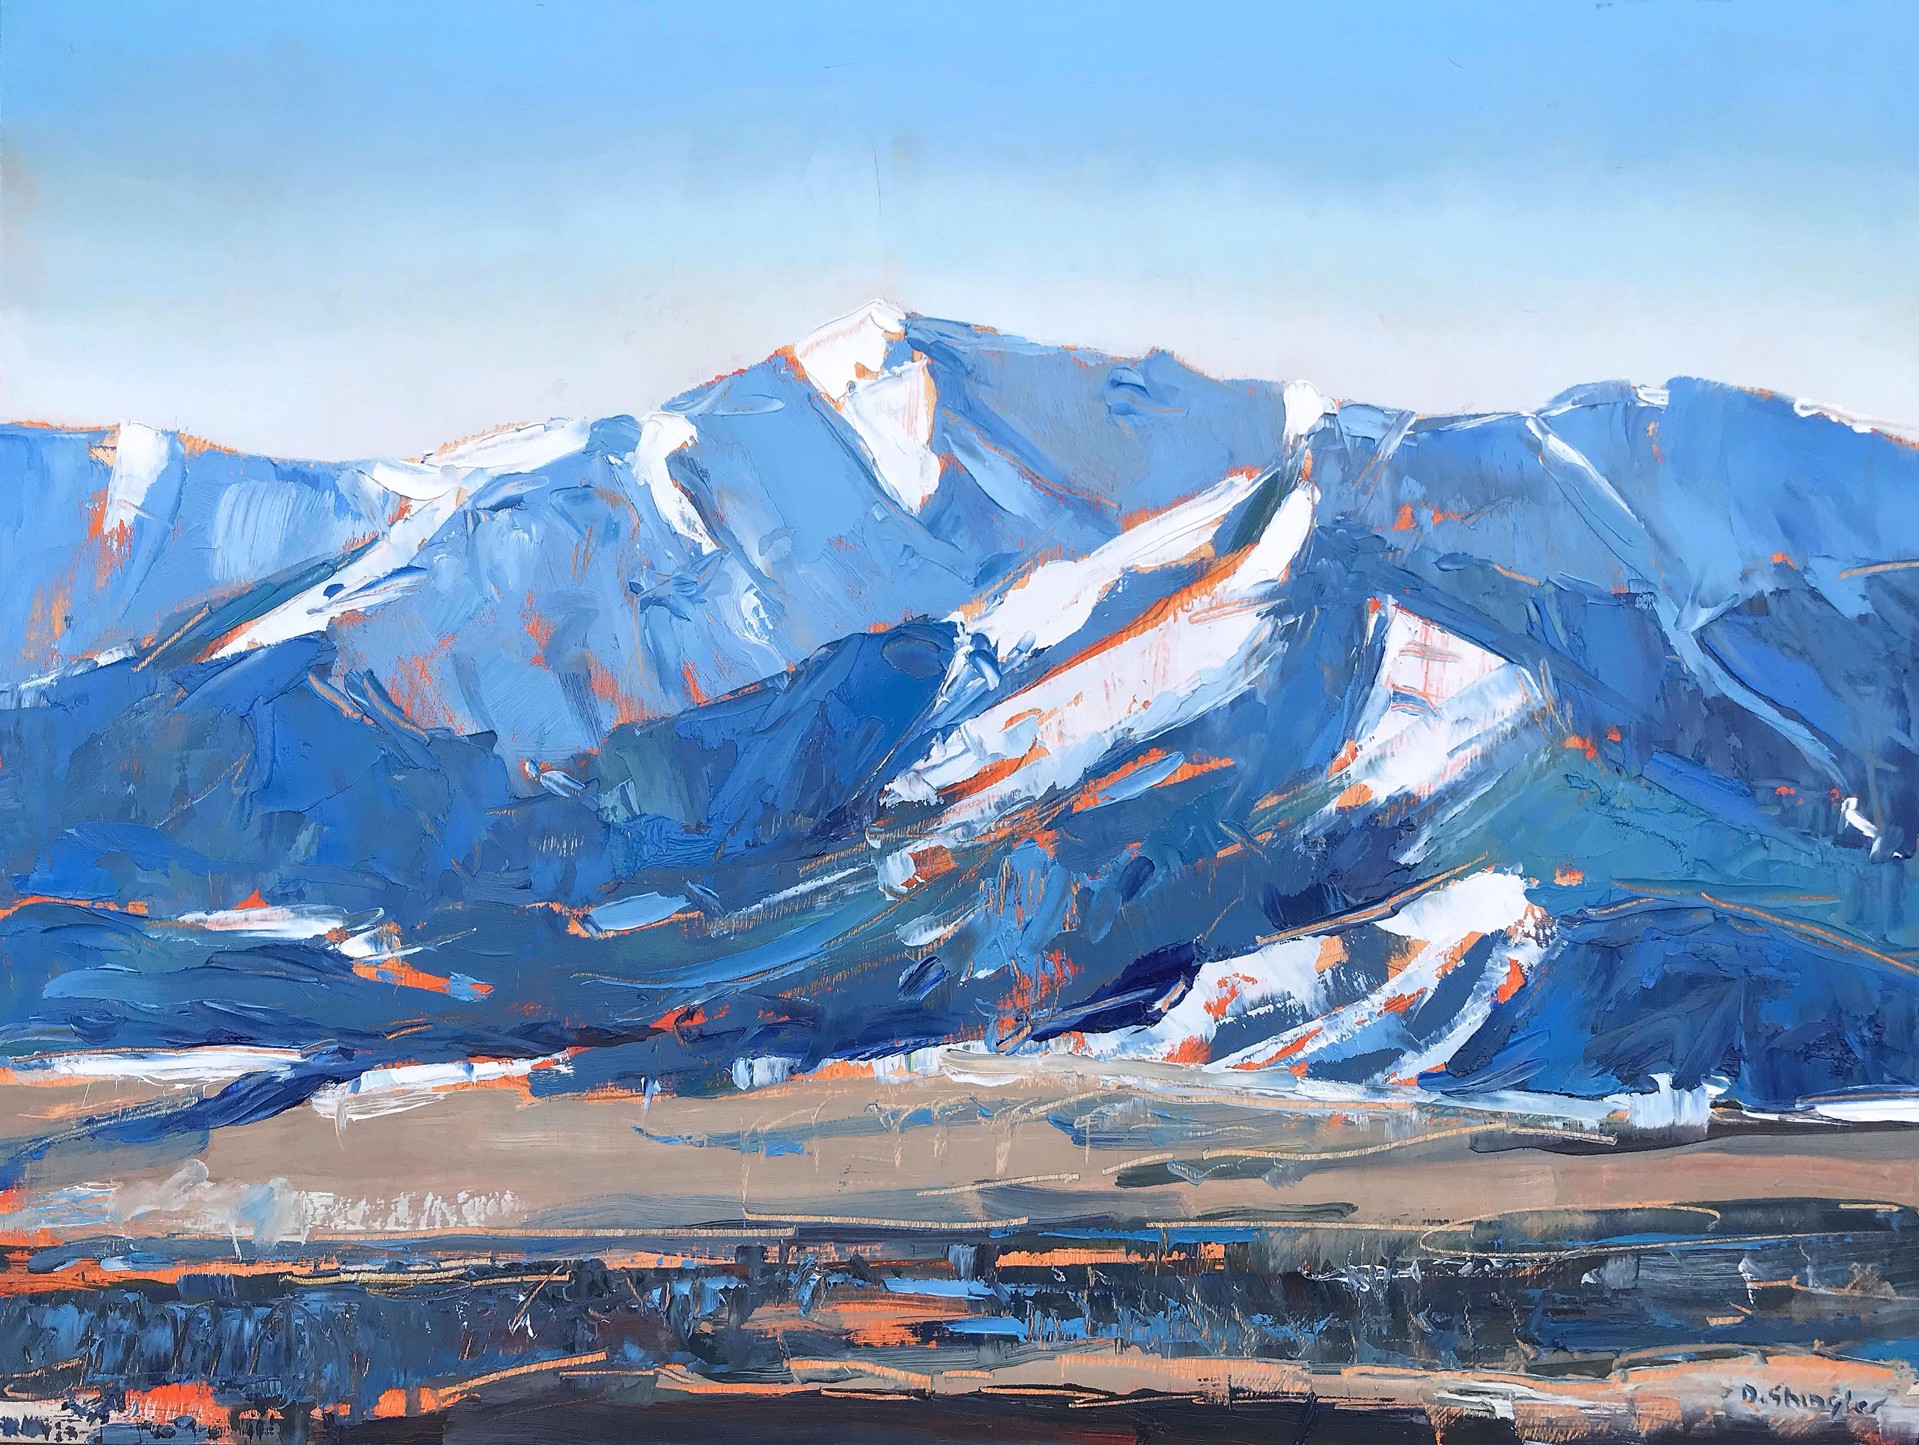 Sangre De Cristo Range, Salida Colorado by David Shingler